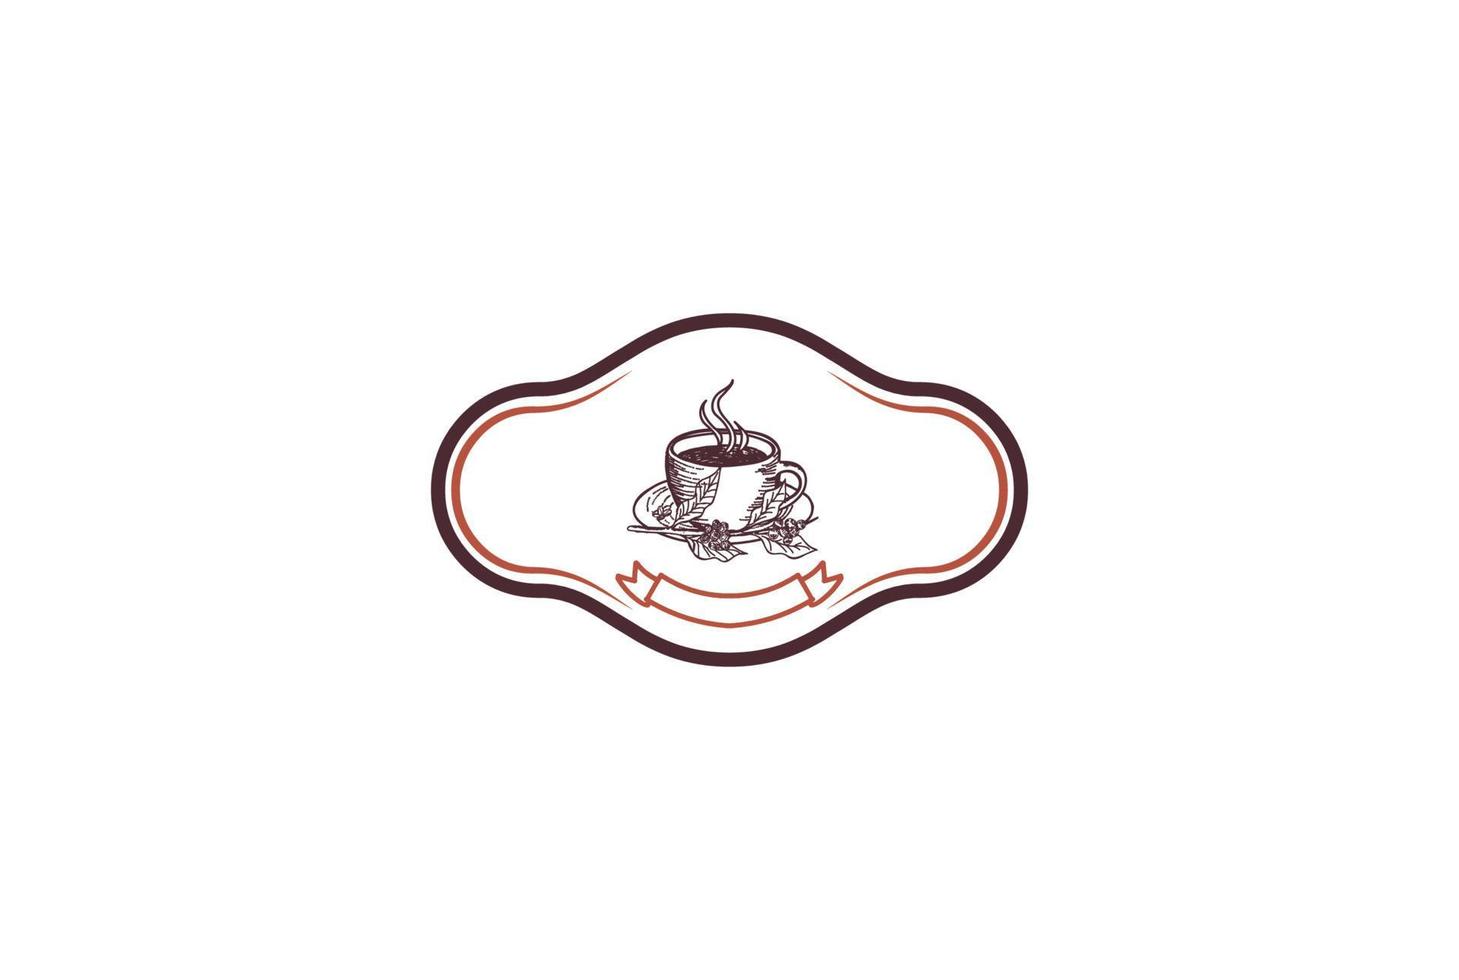 xícara de café vintage retrô para restaurante de café ou vetor de design de logotipo de rótulo de produto